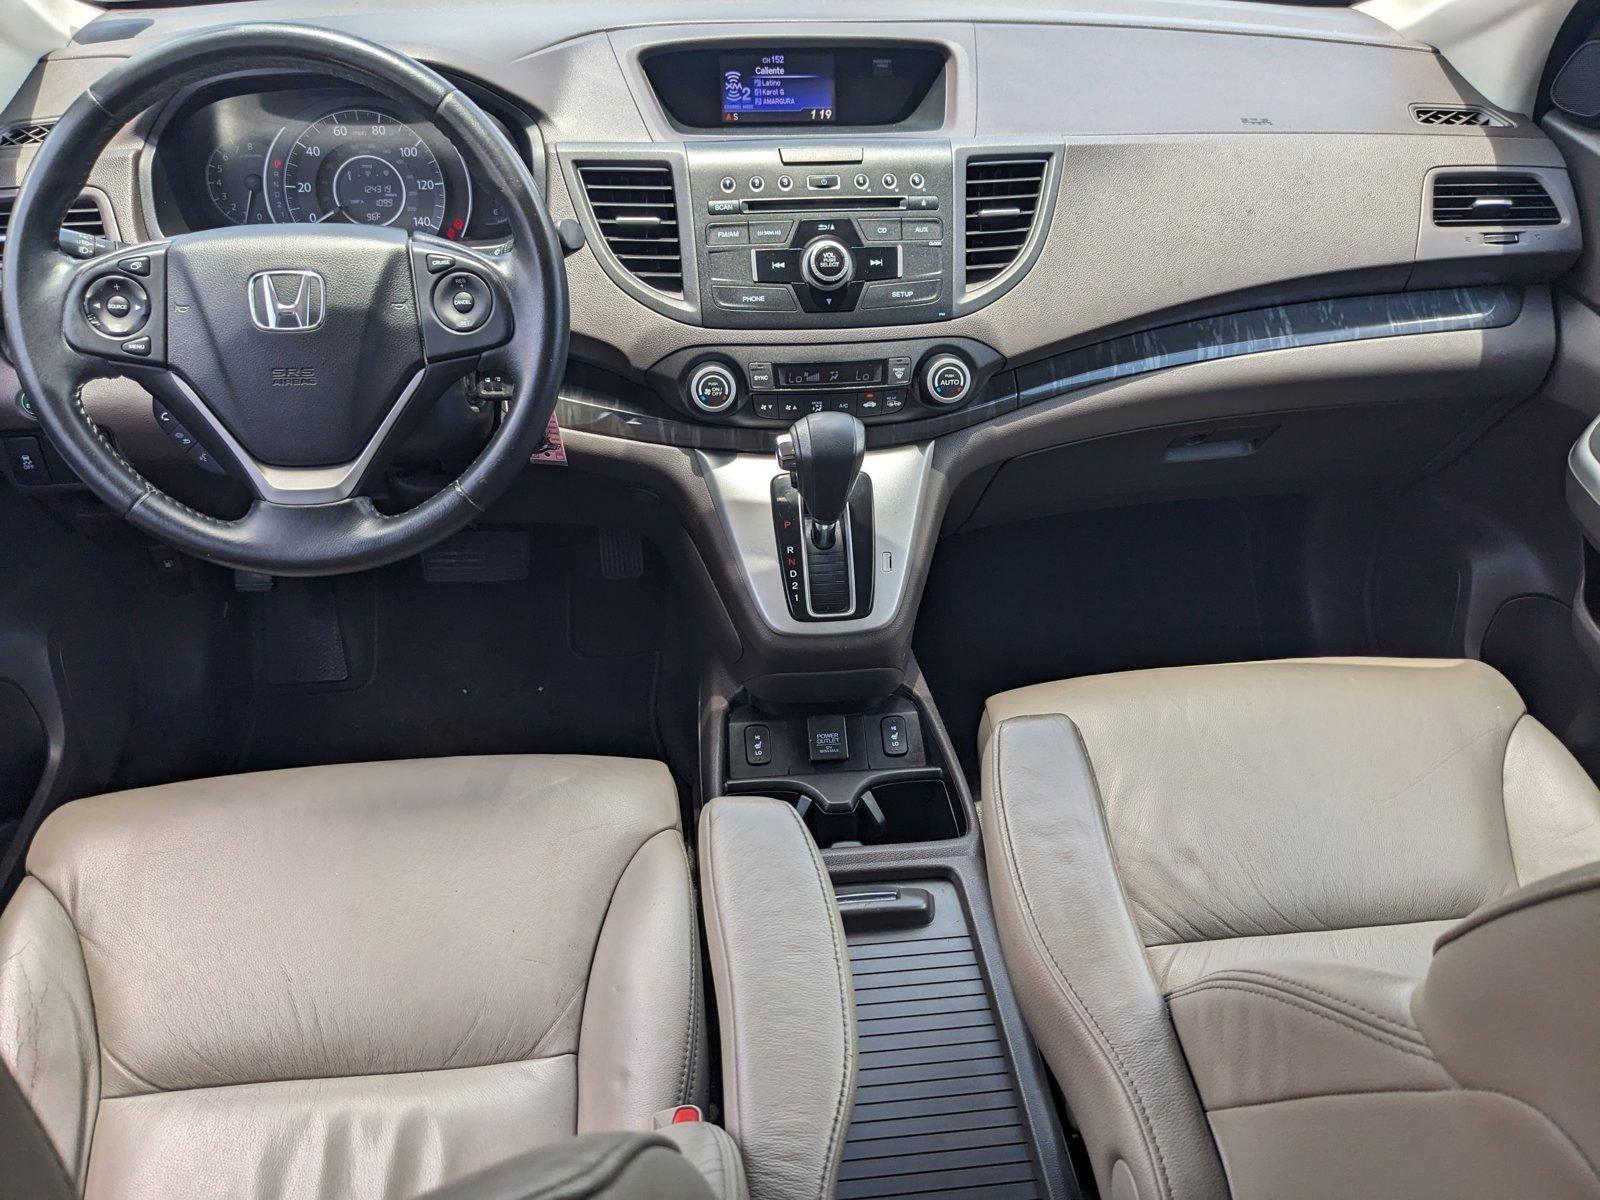 2014 Honda CR-V Vehicle Photo in Panama City, FL 32401